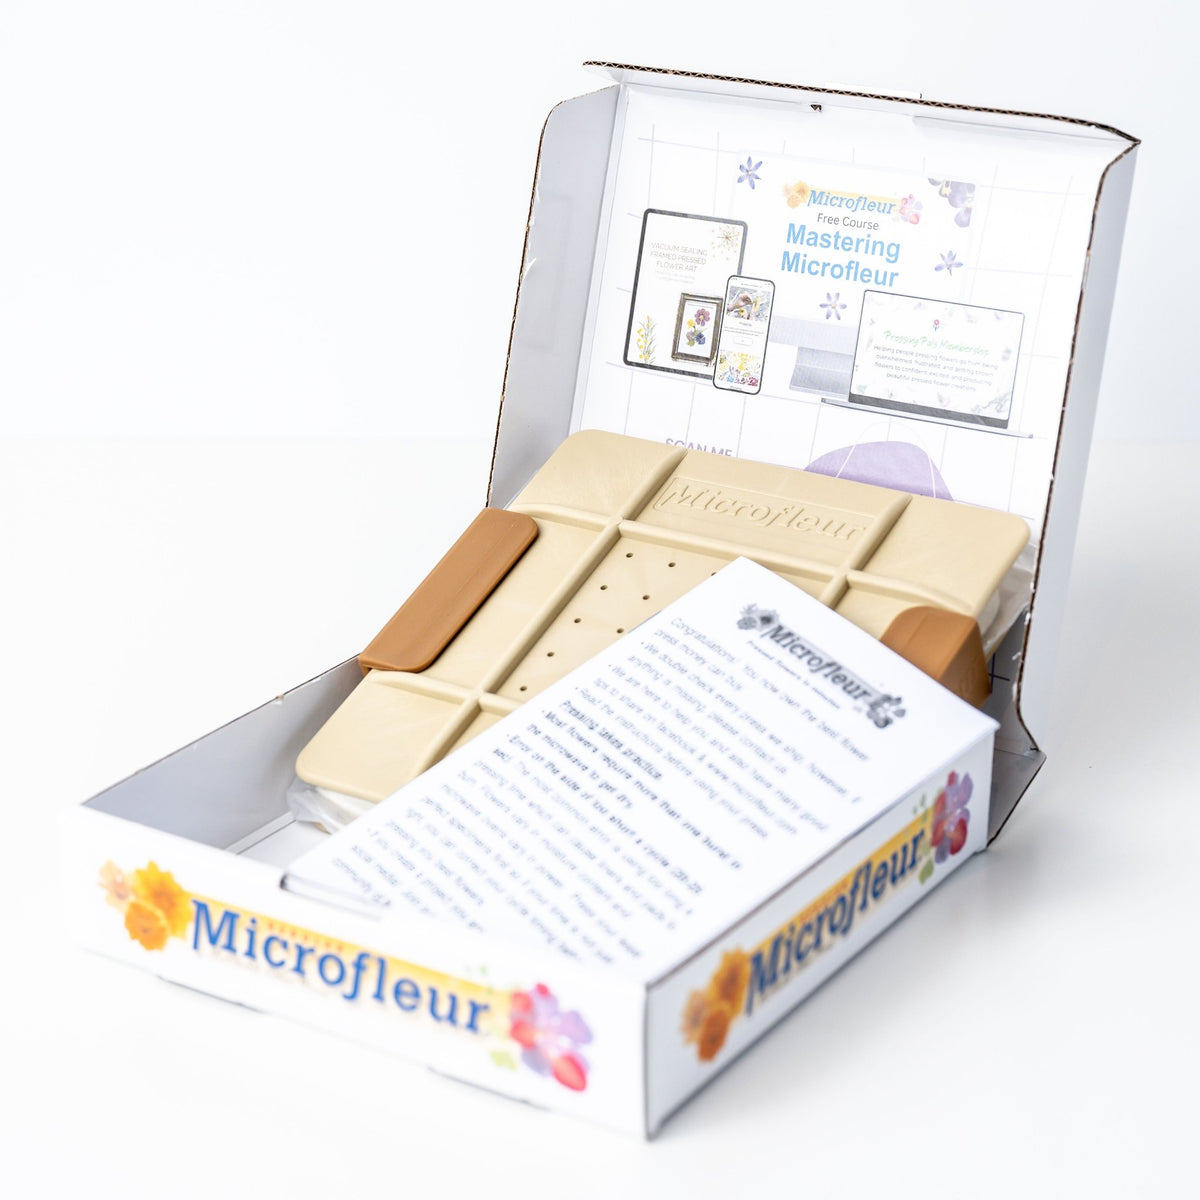 Microfleur Regular Flower Press Kit - Microfleur